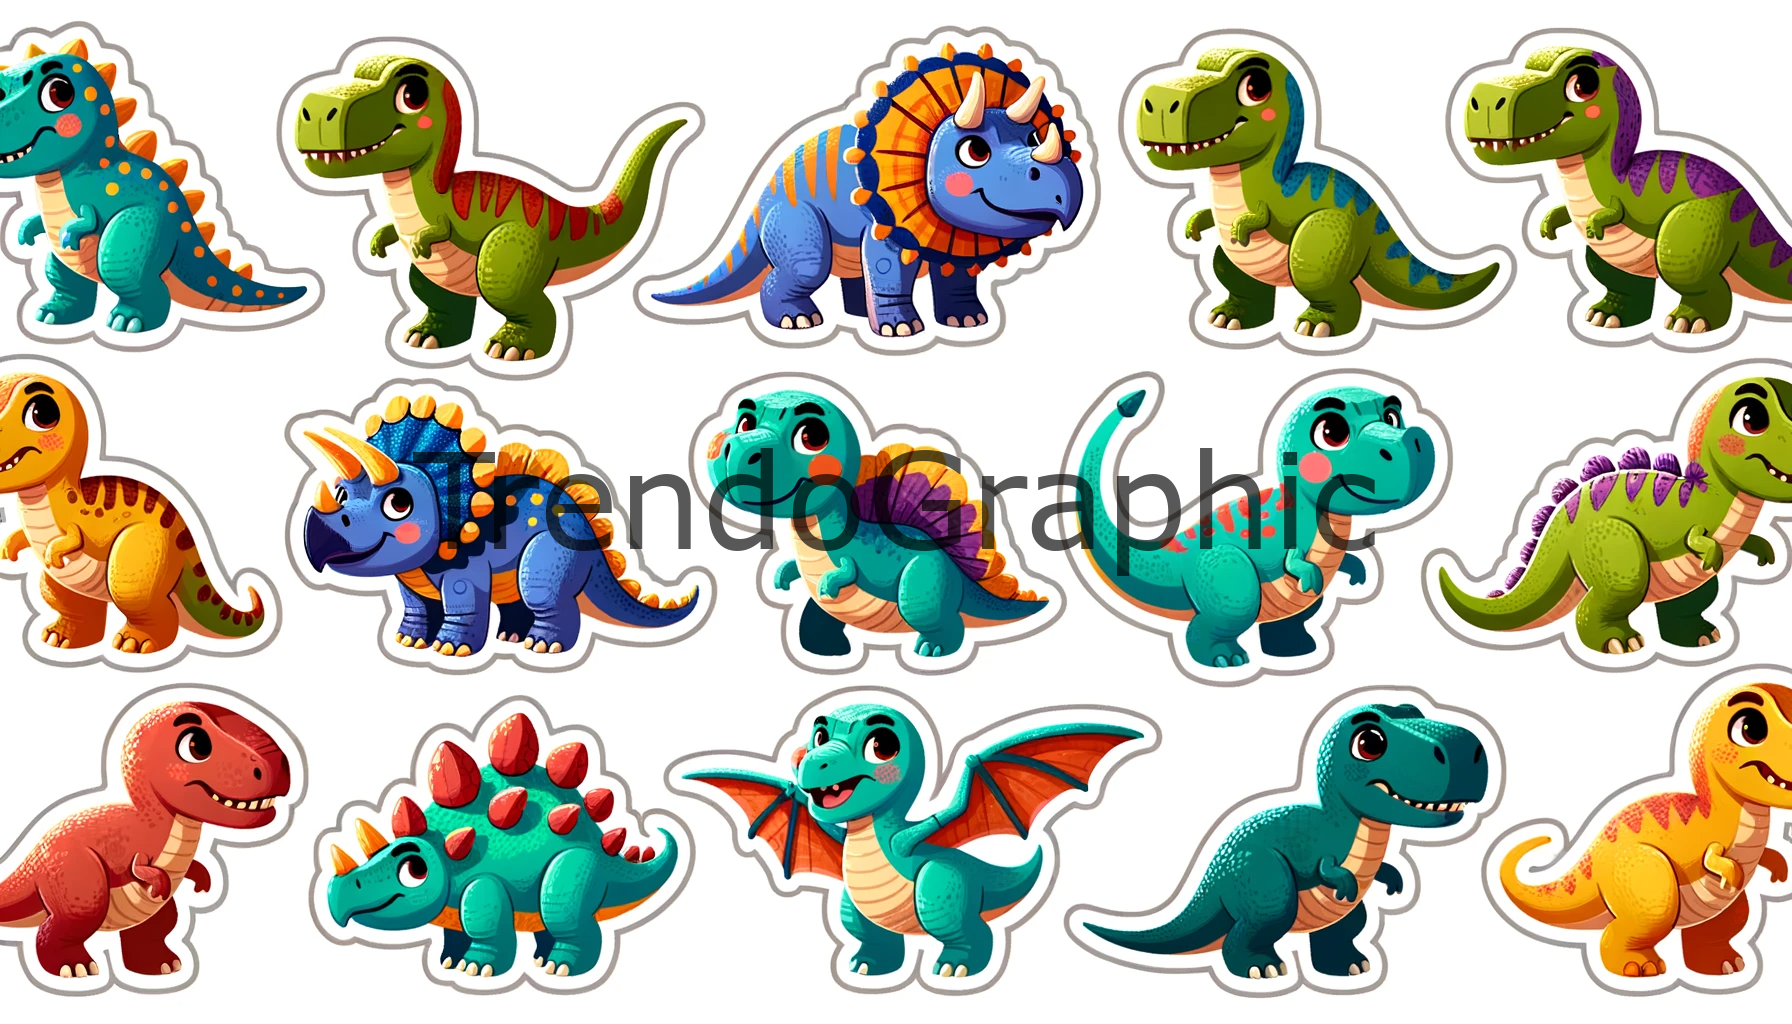 Colorful Dino Sticker Collection for Creative Fun